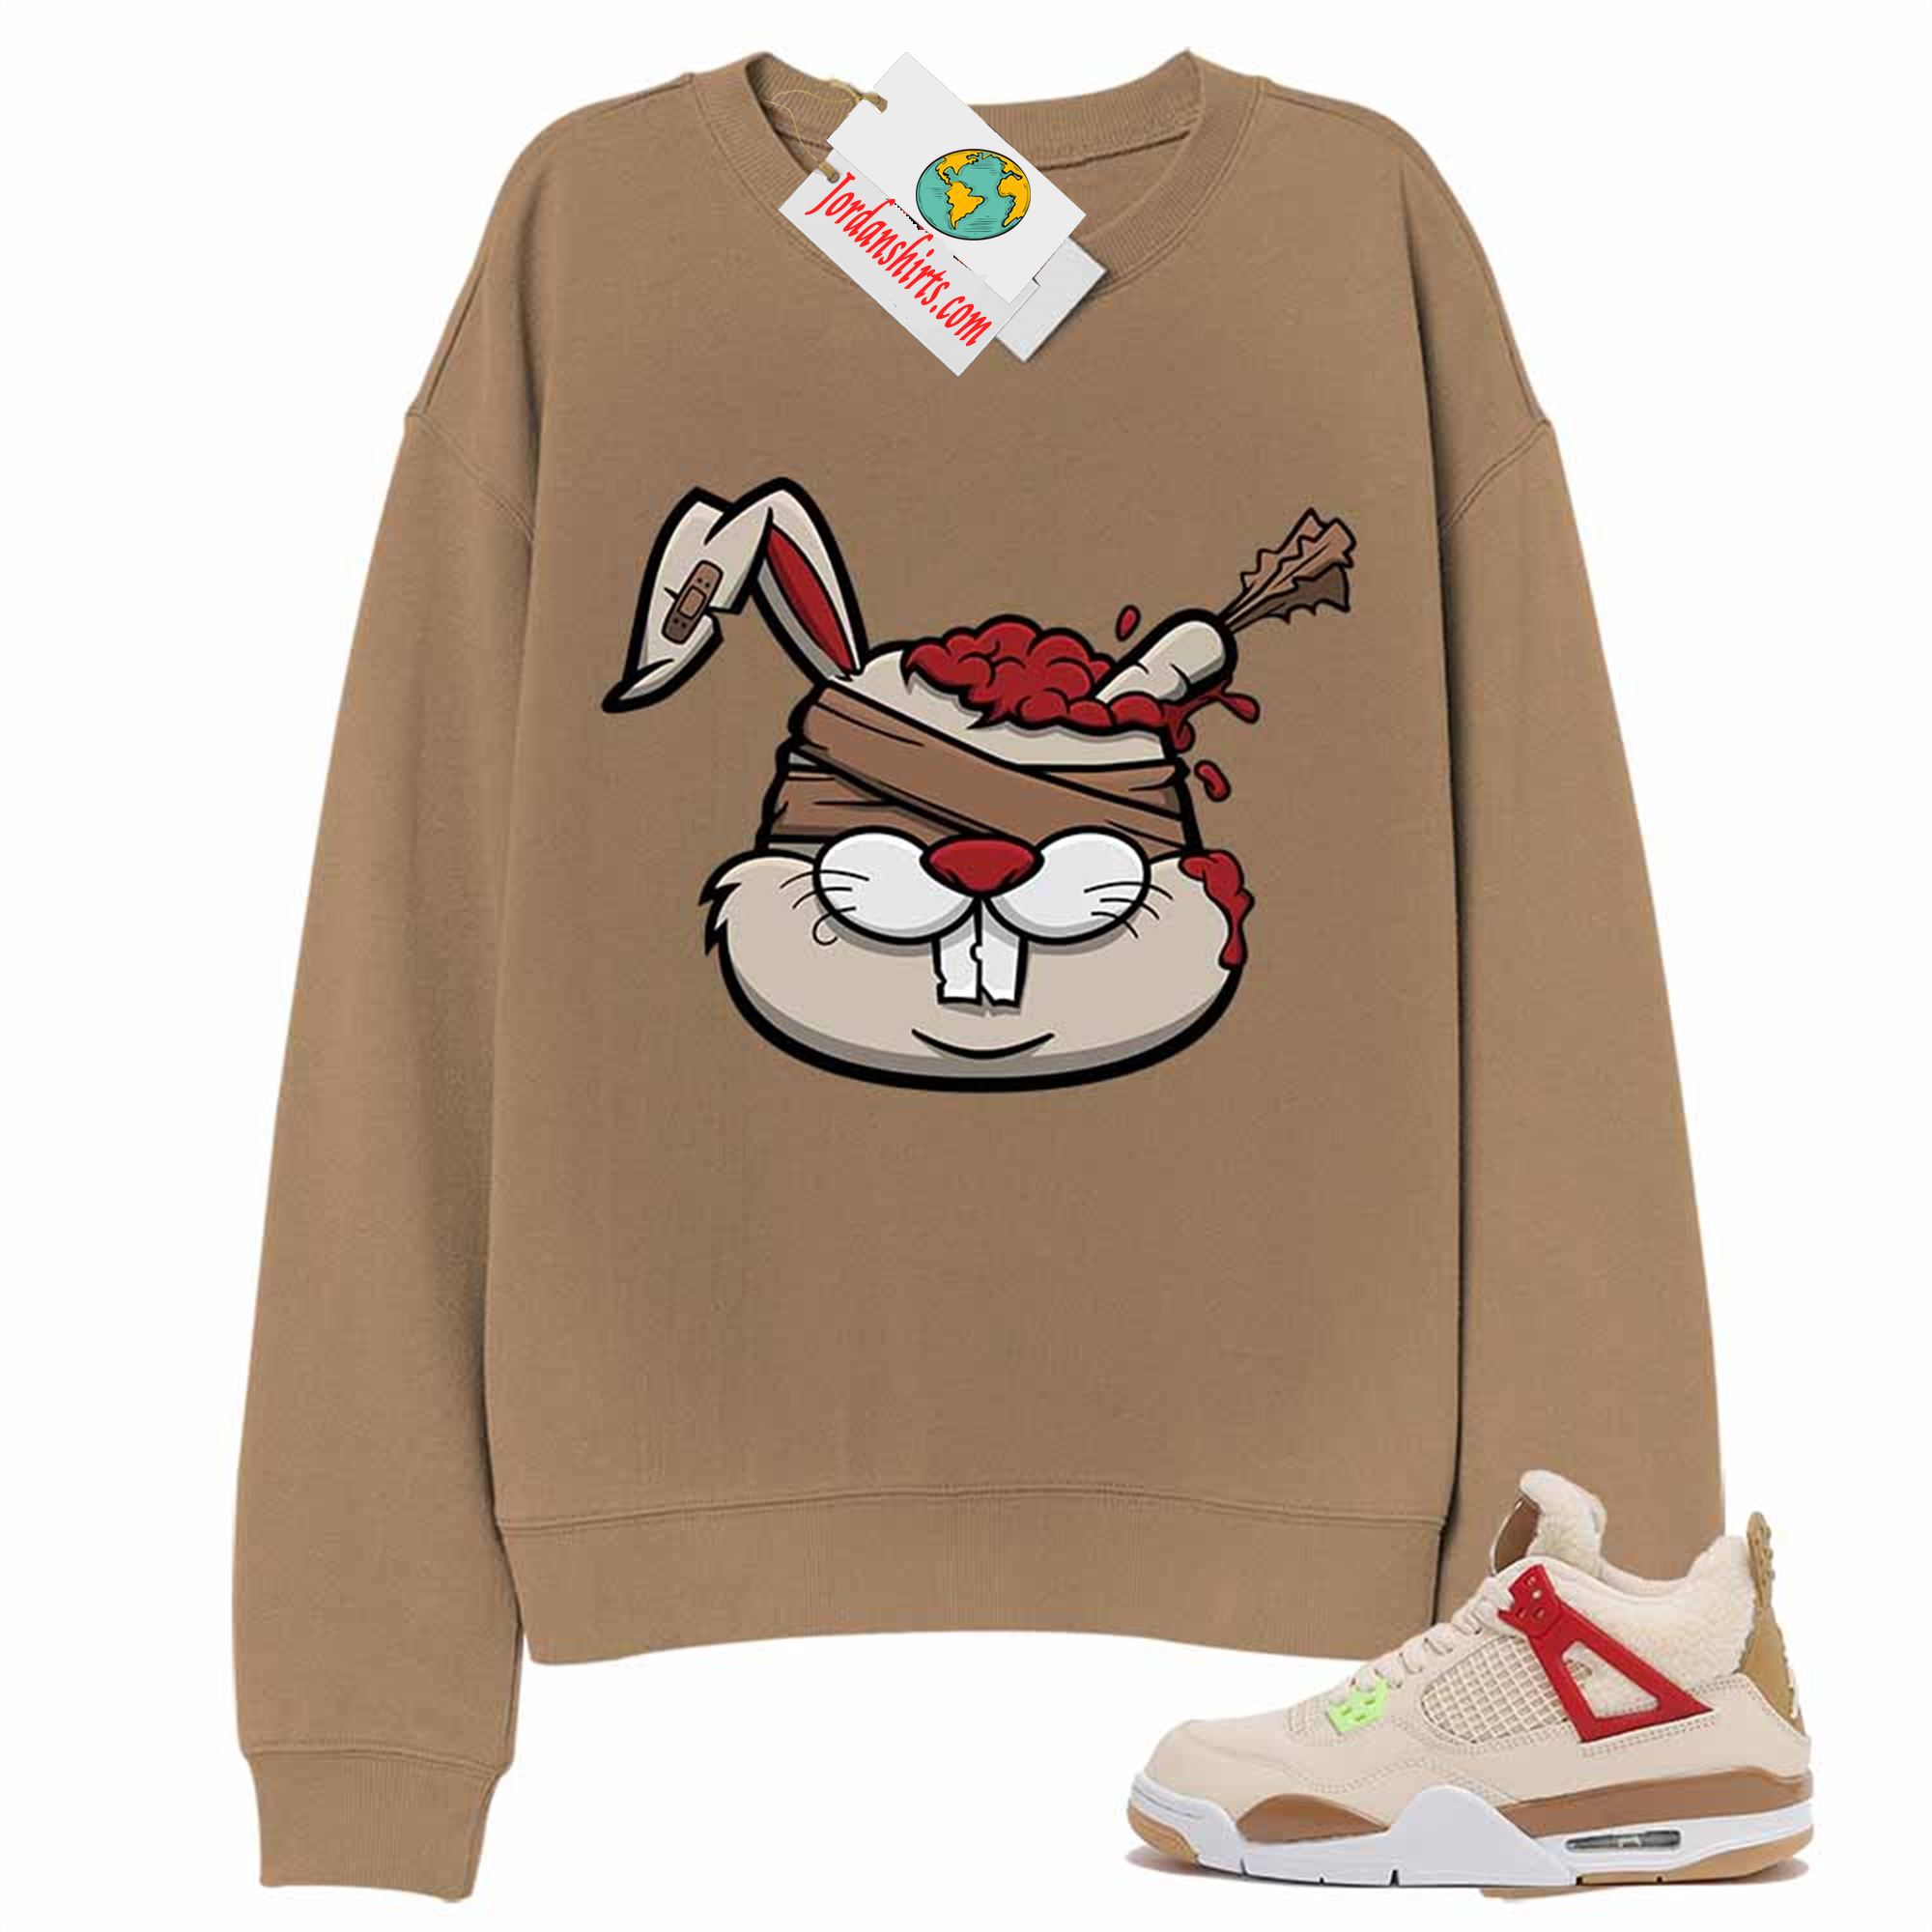 Jordan 4 Sweatshirt, Zombie Bunny Sandstone Sweatshirt Air Jordan 4 Wild Things 4s Size Up To 5xl